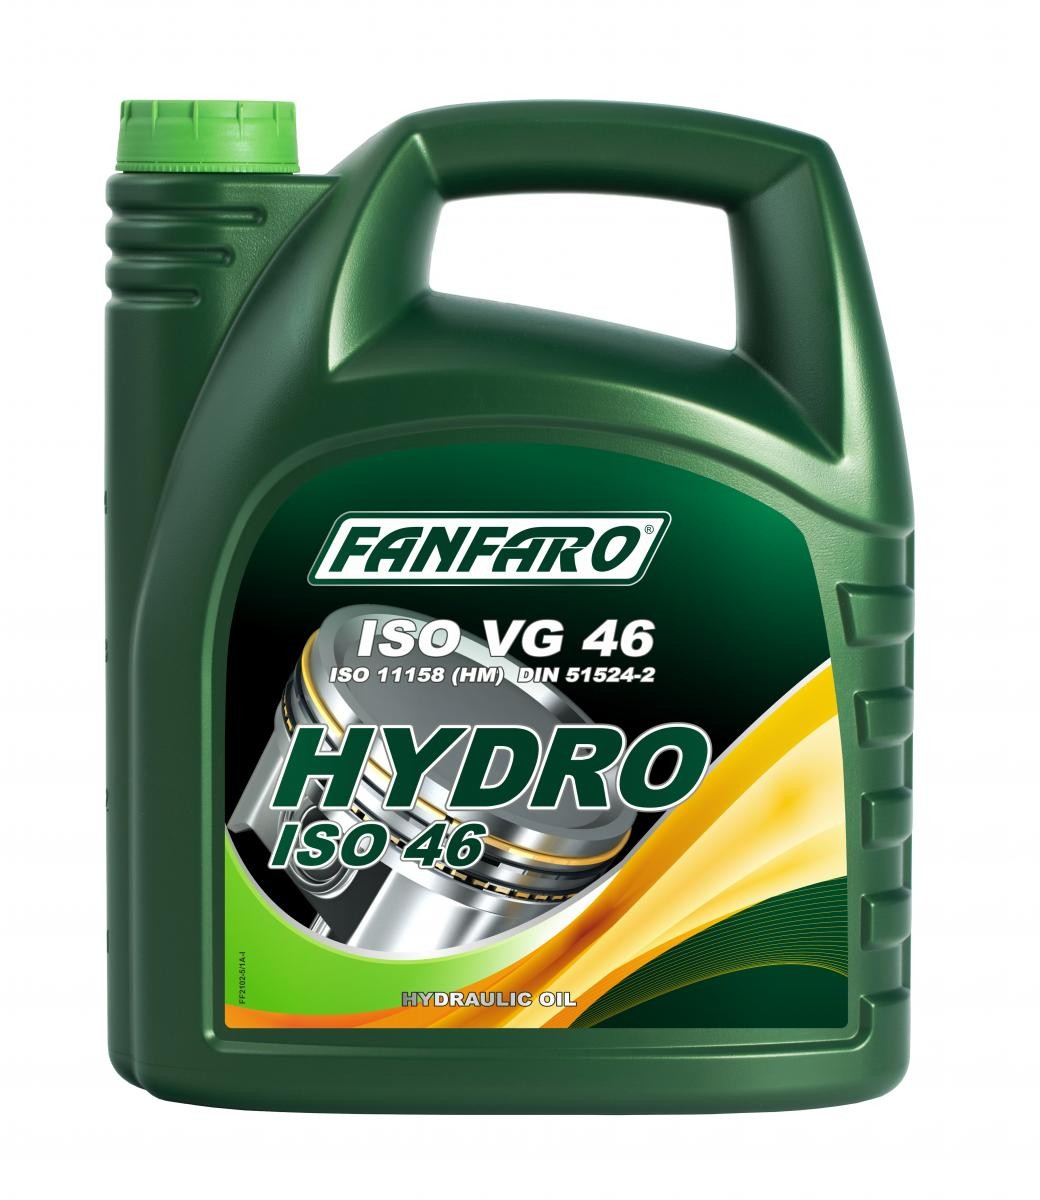 FANFARO Hydro, ISO 46 Capacity: 5l DIN 51524-2 HLP, ISO 11158, ISO VG 46 Hydraulic fluid FF2102-5 buy